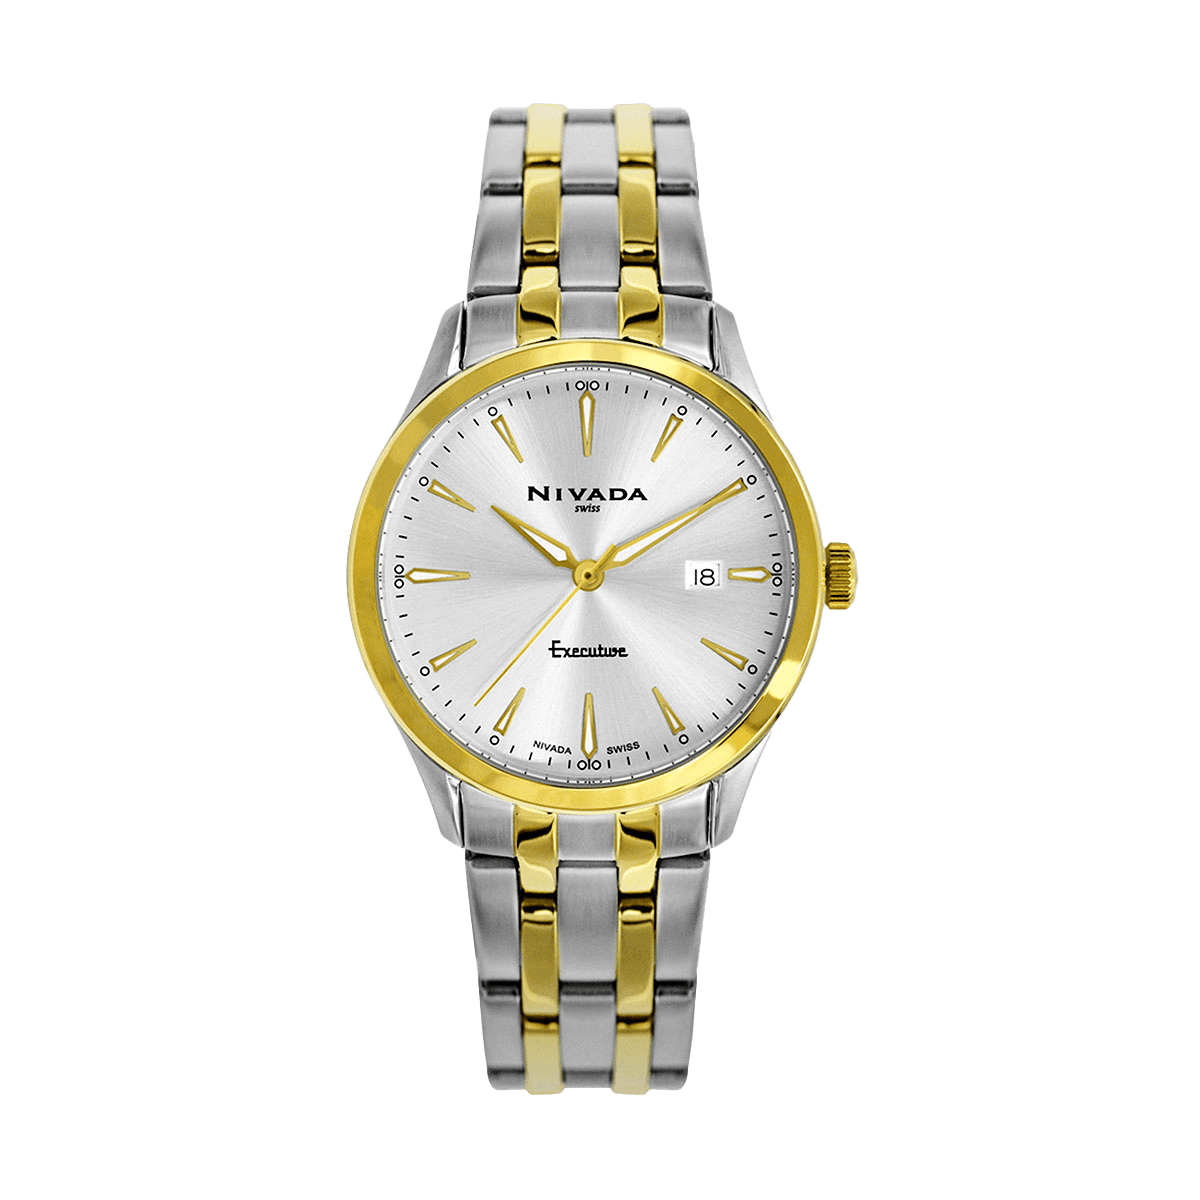 Executive Date At 3 Para Dama - Altitud 1911 - Reloj Nivada Swiss